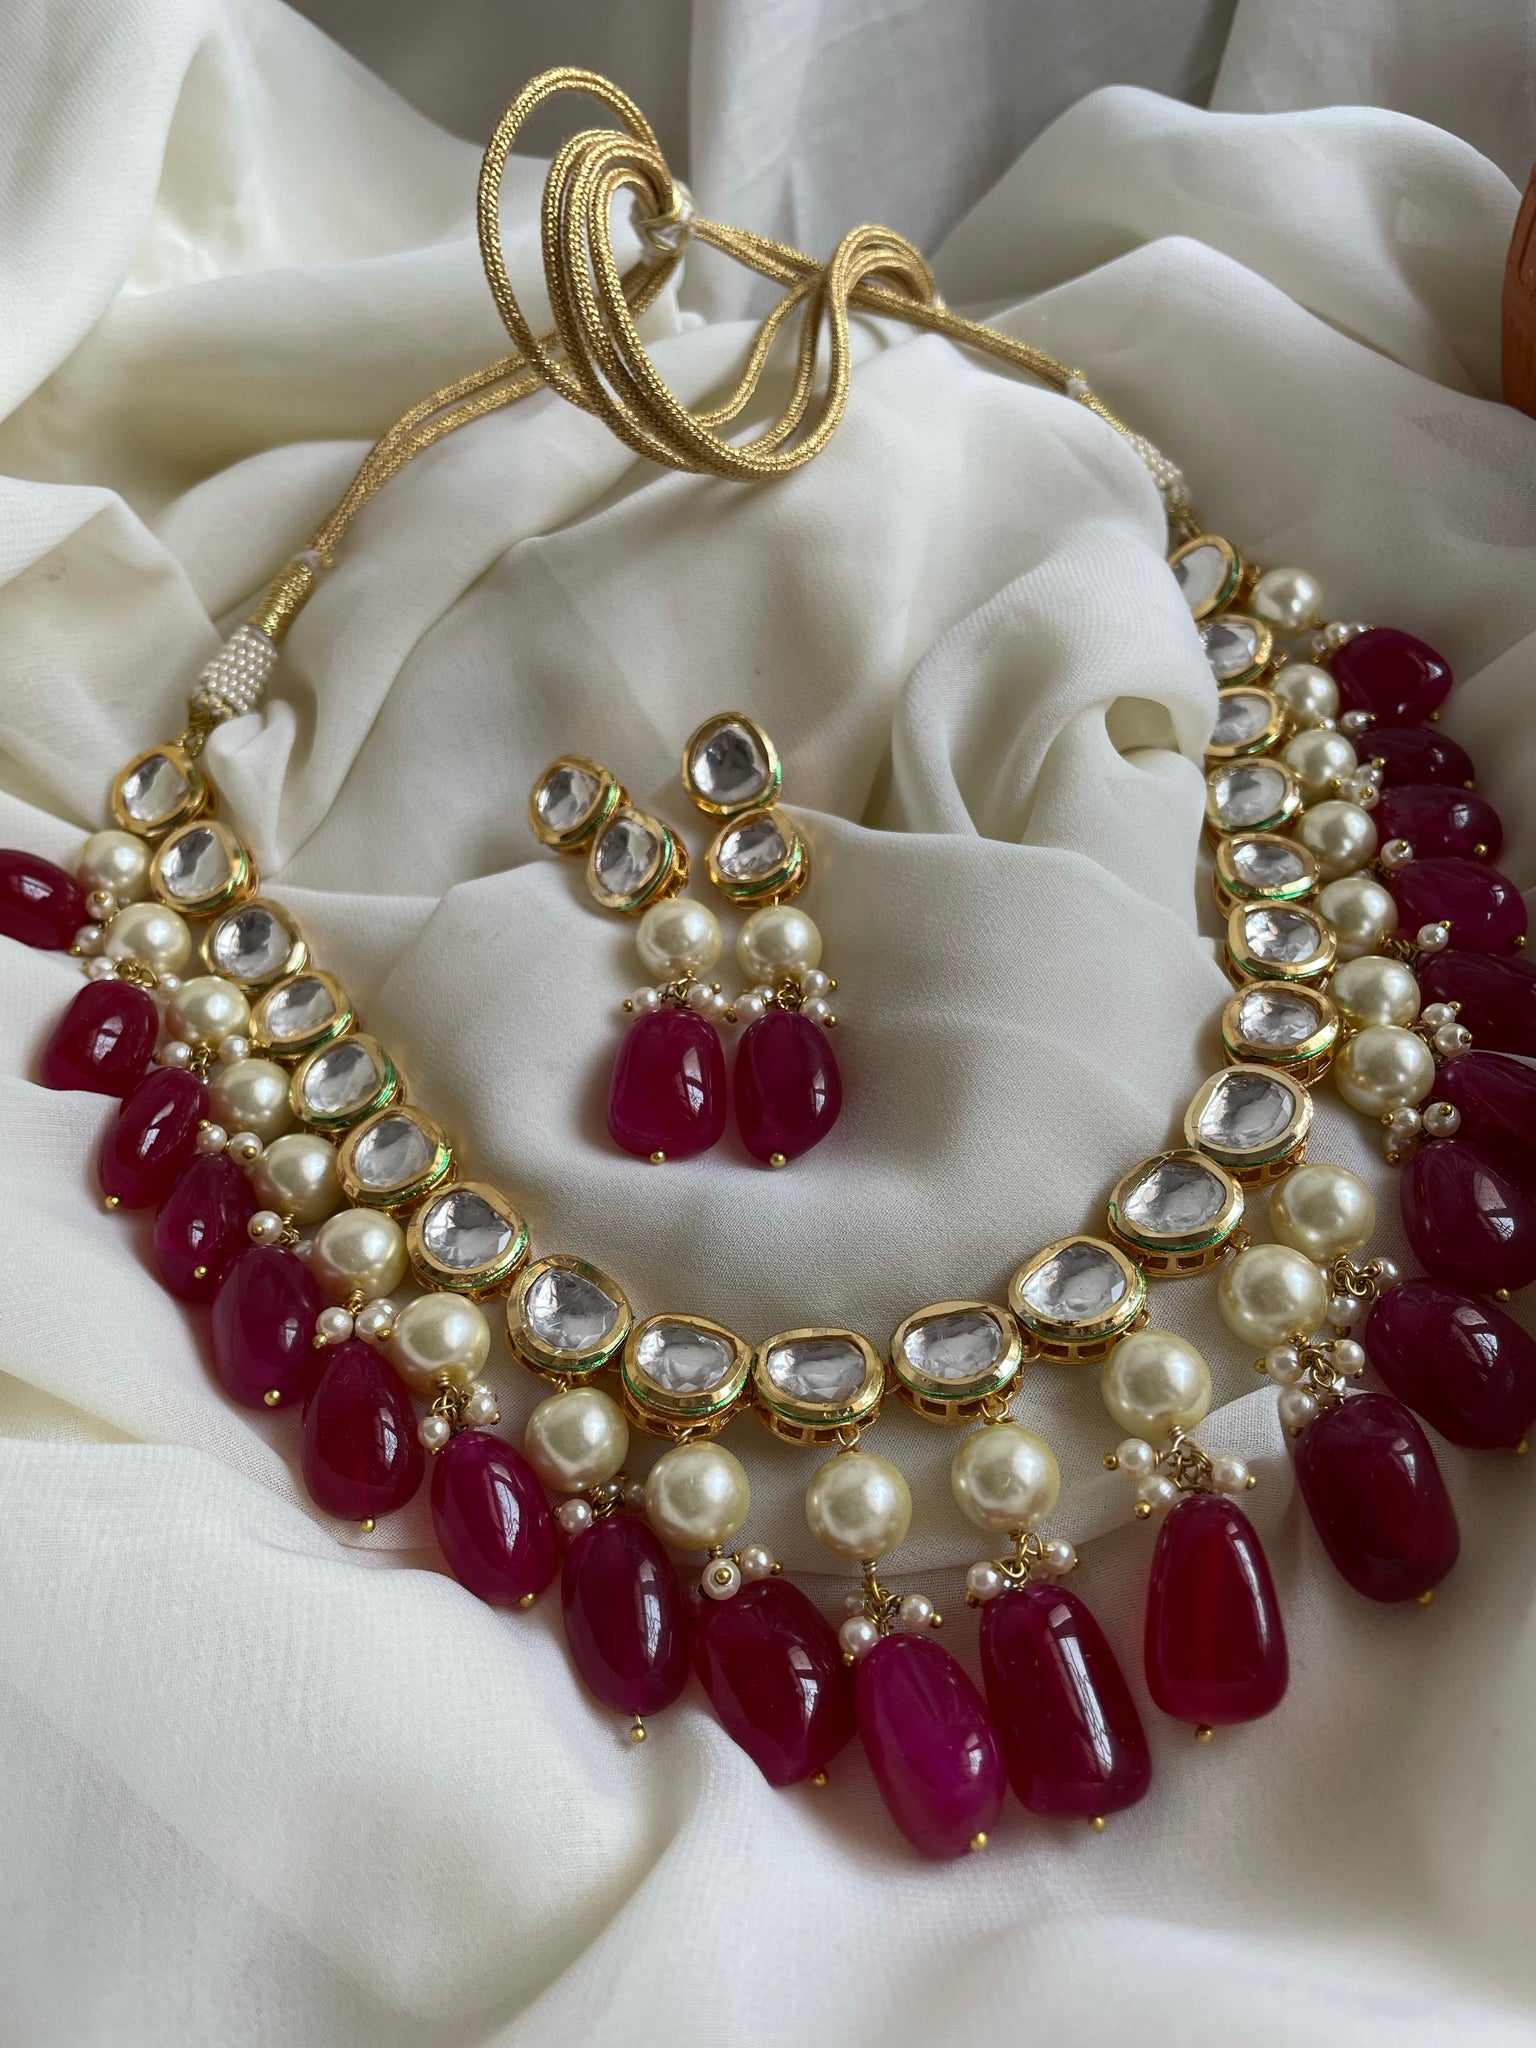 Kundan like necklace with onyx Beads with earrings